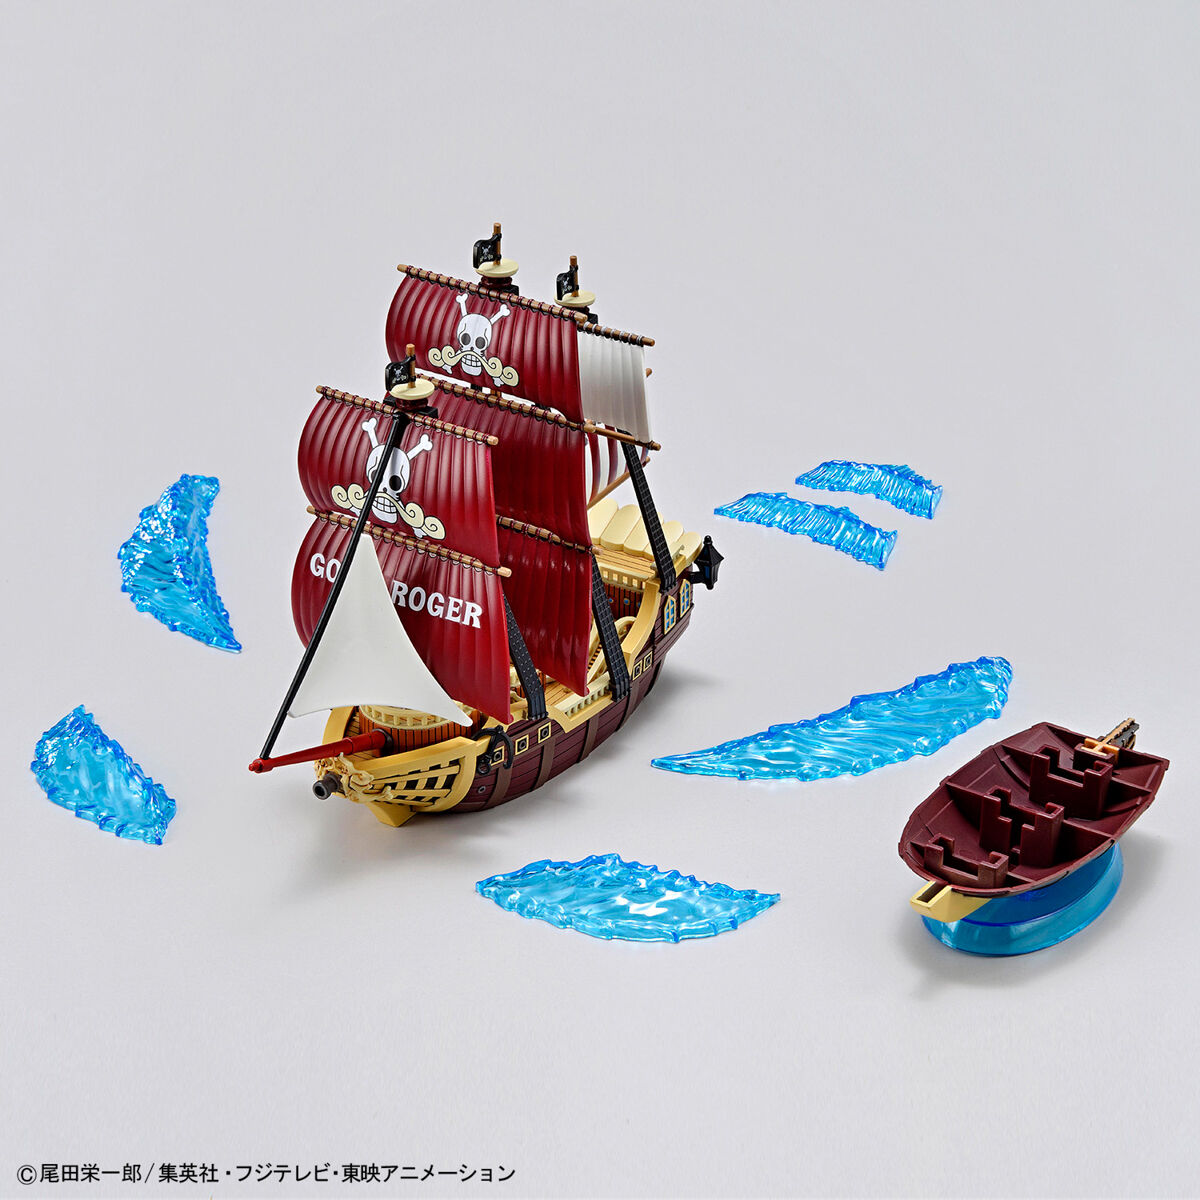 One Piece Grand Ship Collection Oro Jackson-Bandai-Ace Cards &amp; Collectibles